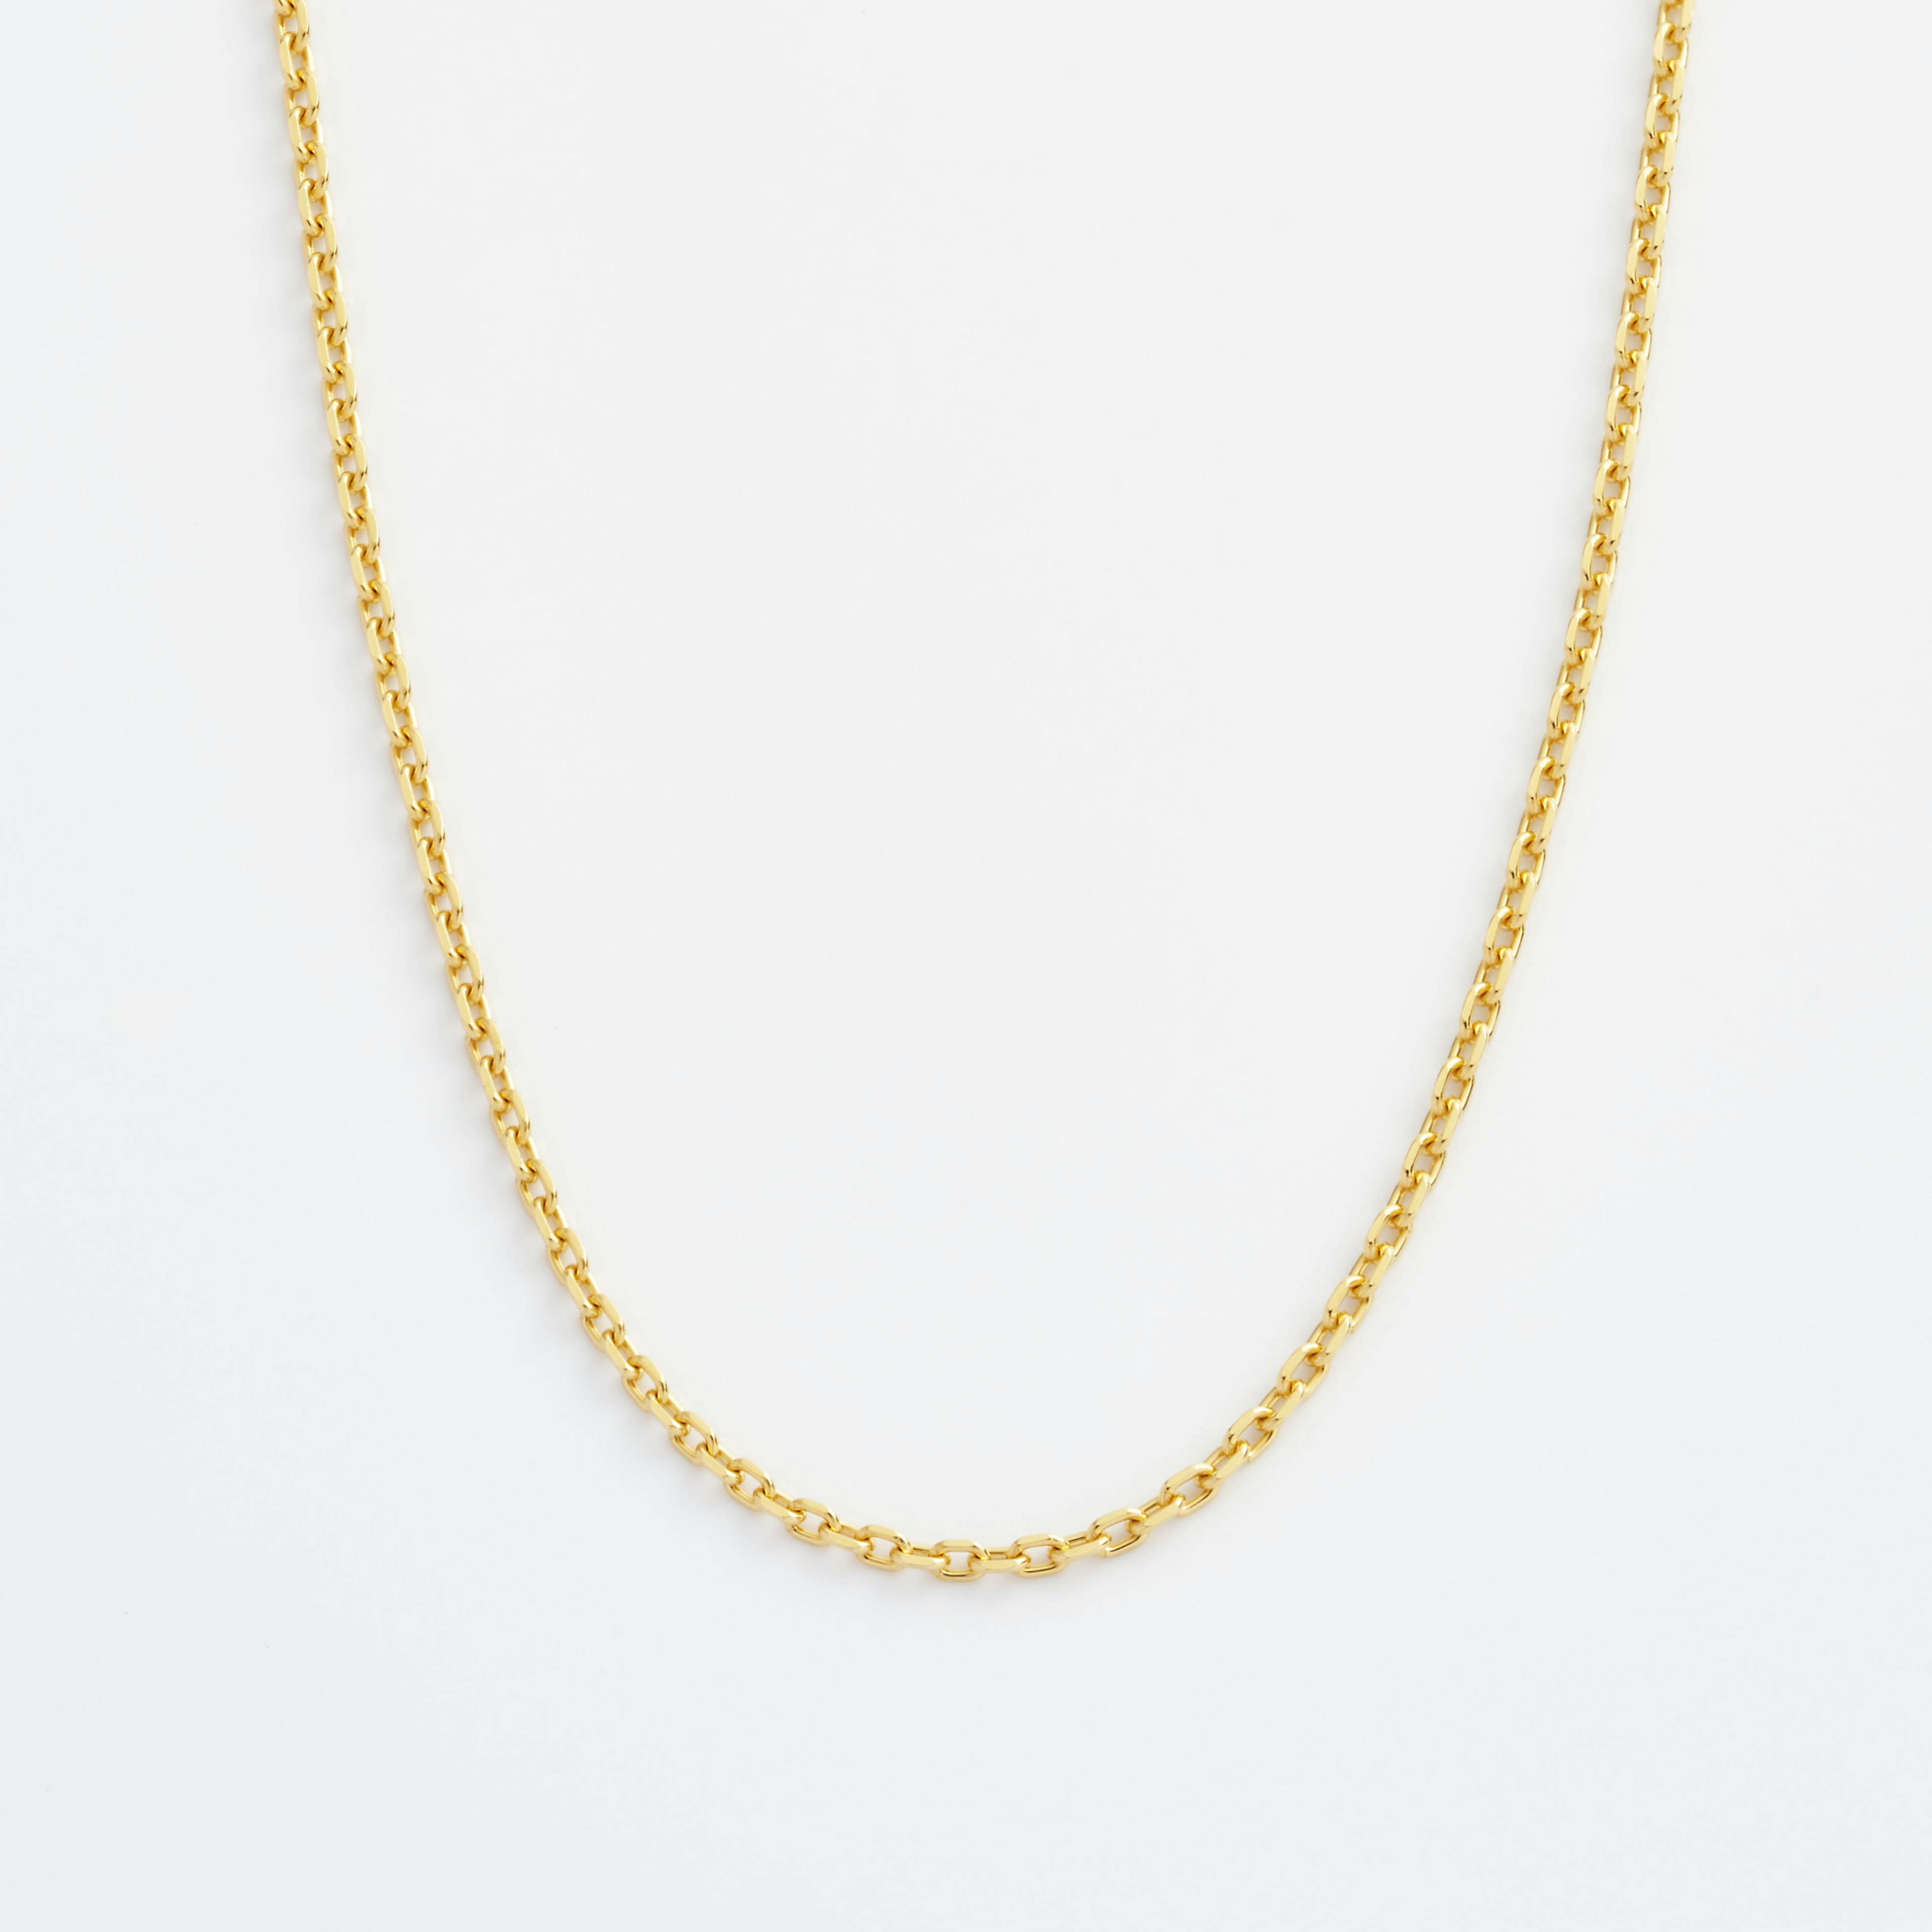 Shop Gold Necklace Chains Wide Diamond Cut Cable Chain Necklace